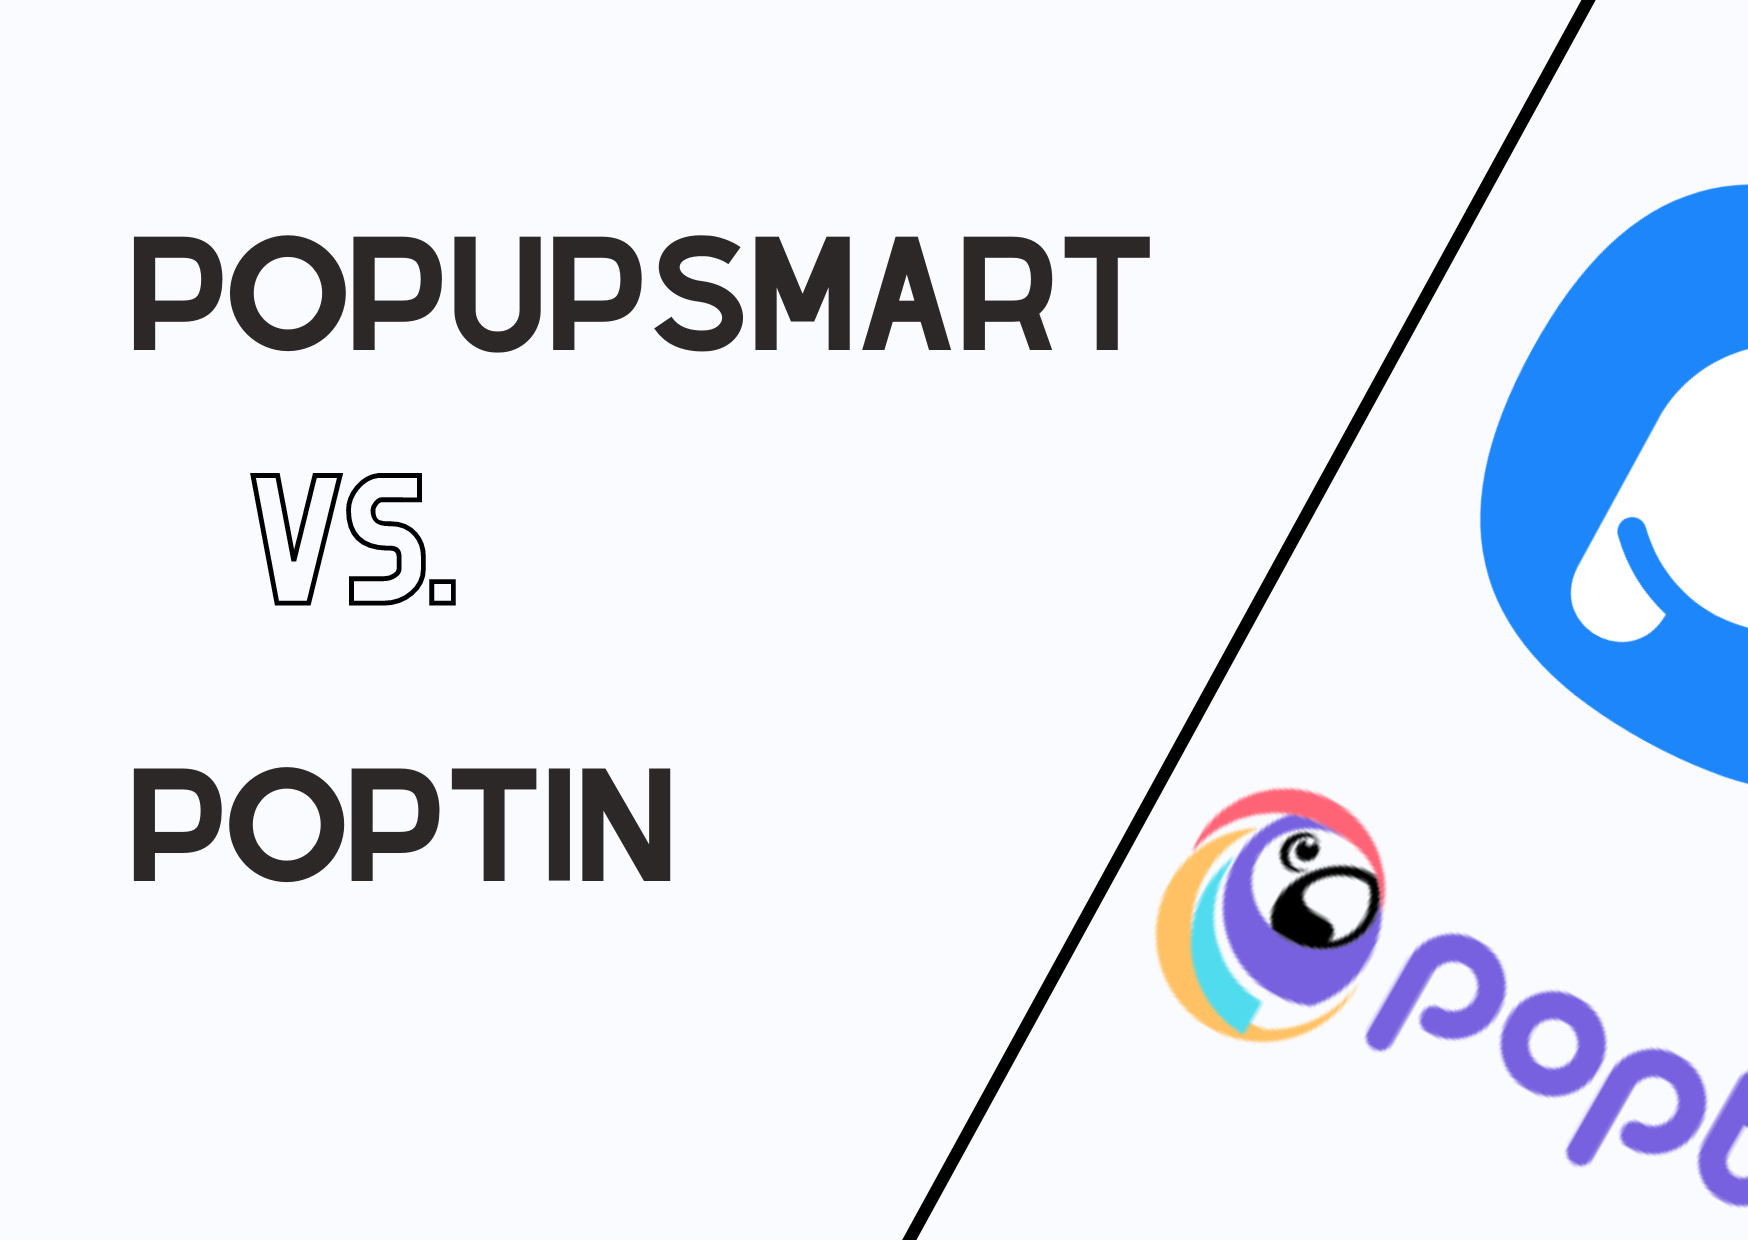 Popupsmart vs. Poptin with their logos 